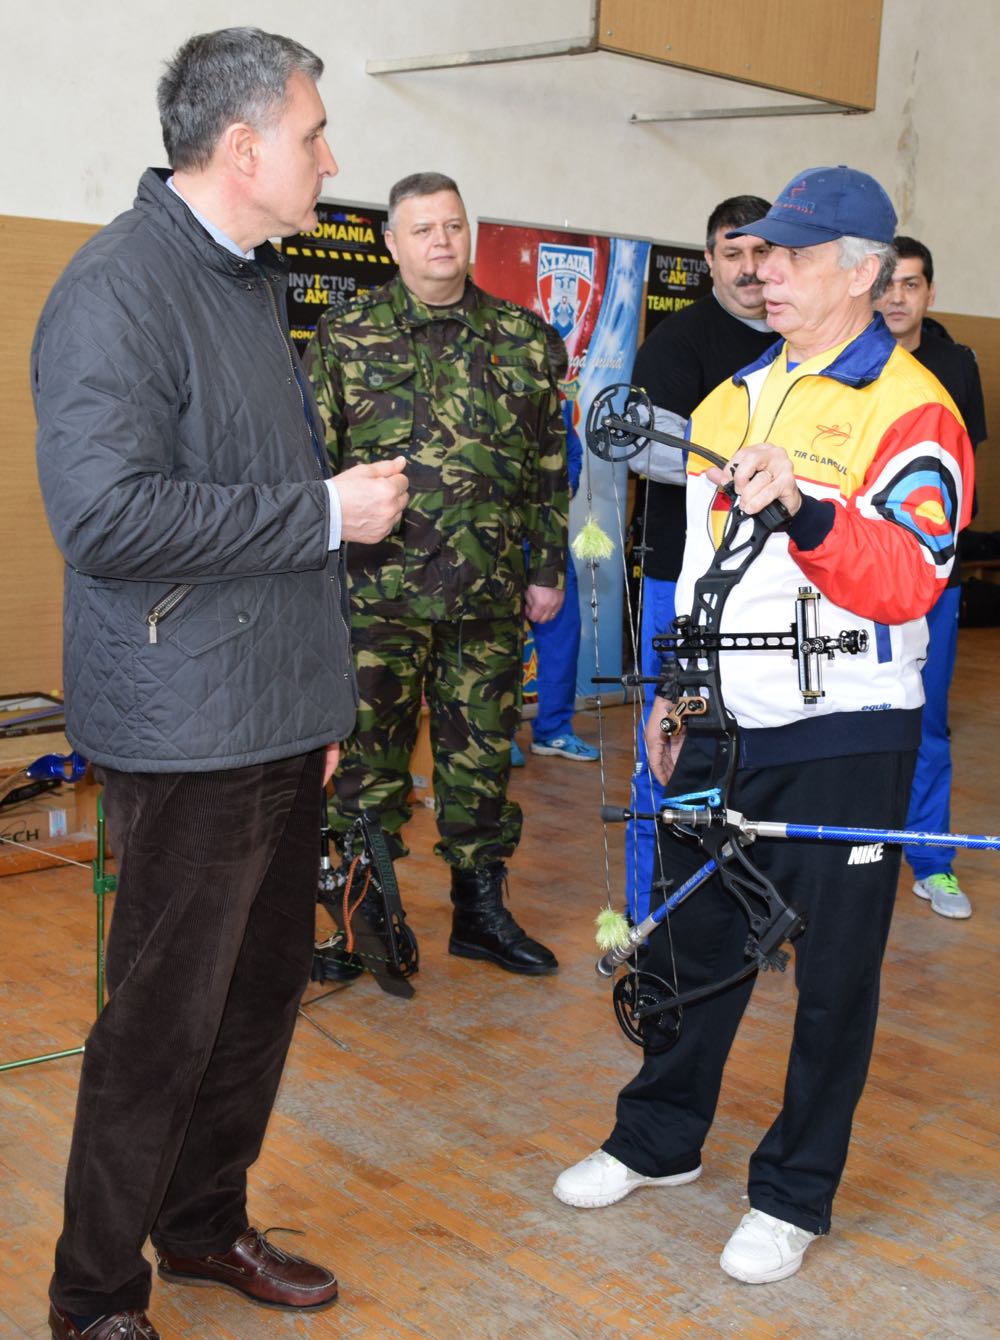 Principele Radu viziteaza pe militarii Invictus in cantonament la Baza sportiva militara de la Saftica, 21 februarie 2017